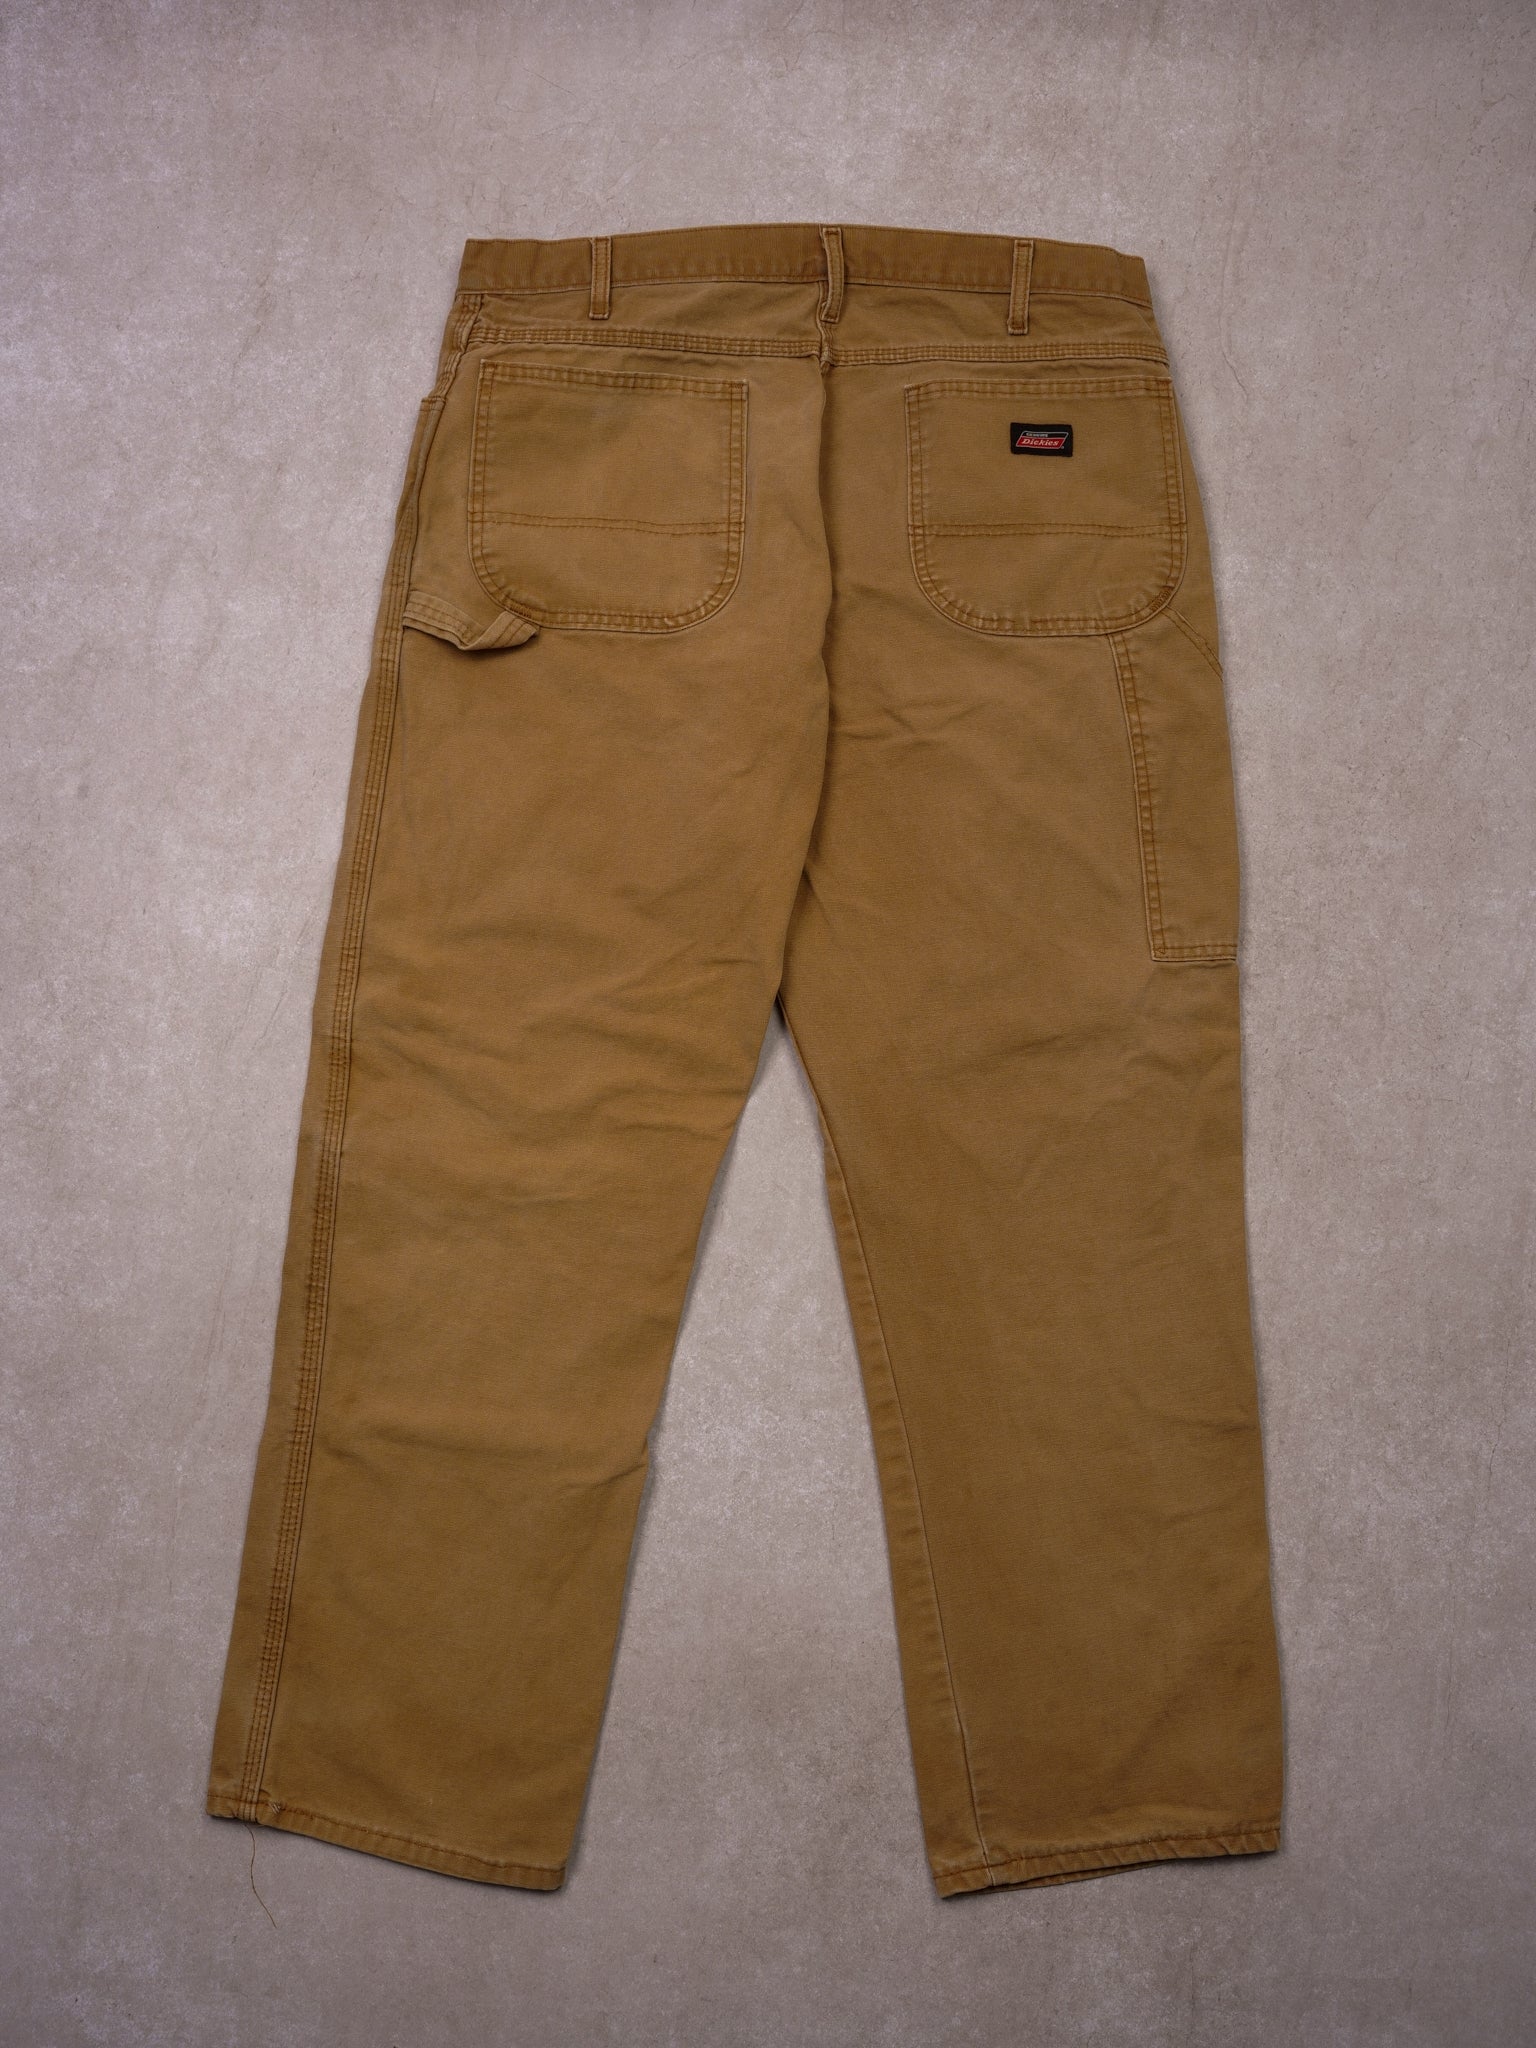 Vintage 90s Khaki Dickies Carpenter Pants (36x32)